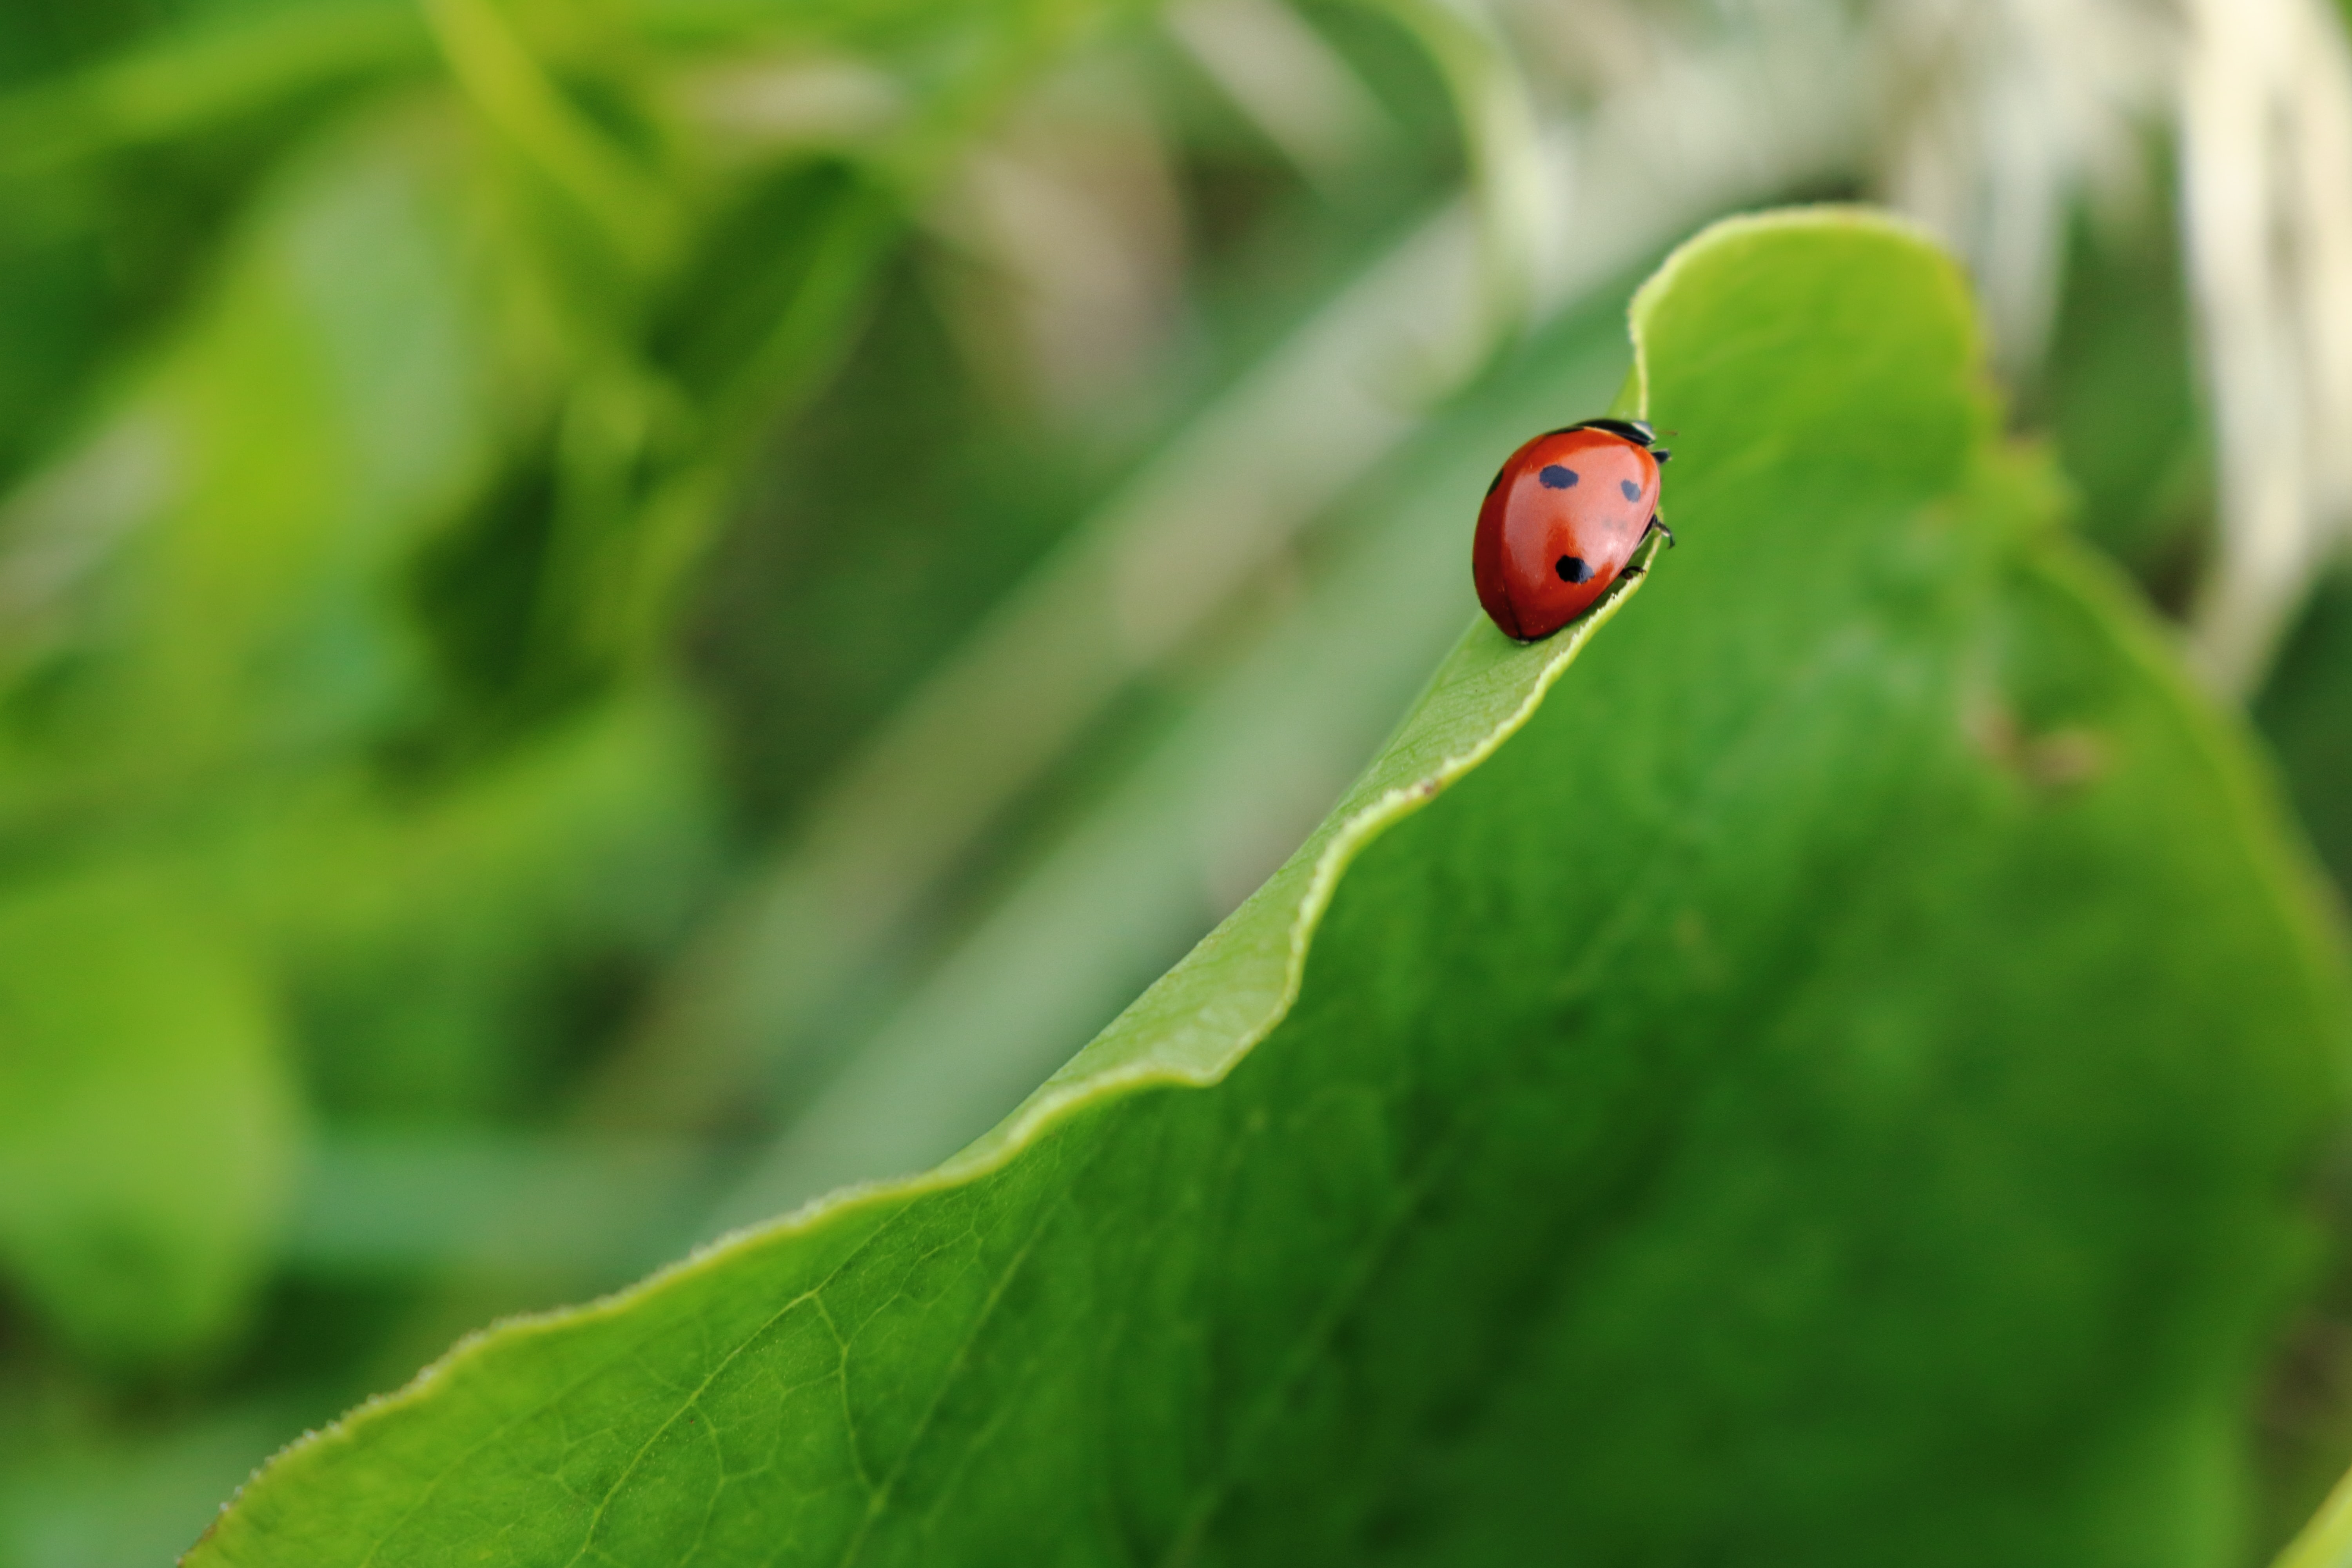 Ladybug crawls on a large green leafy plant